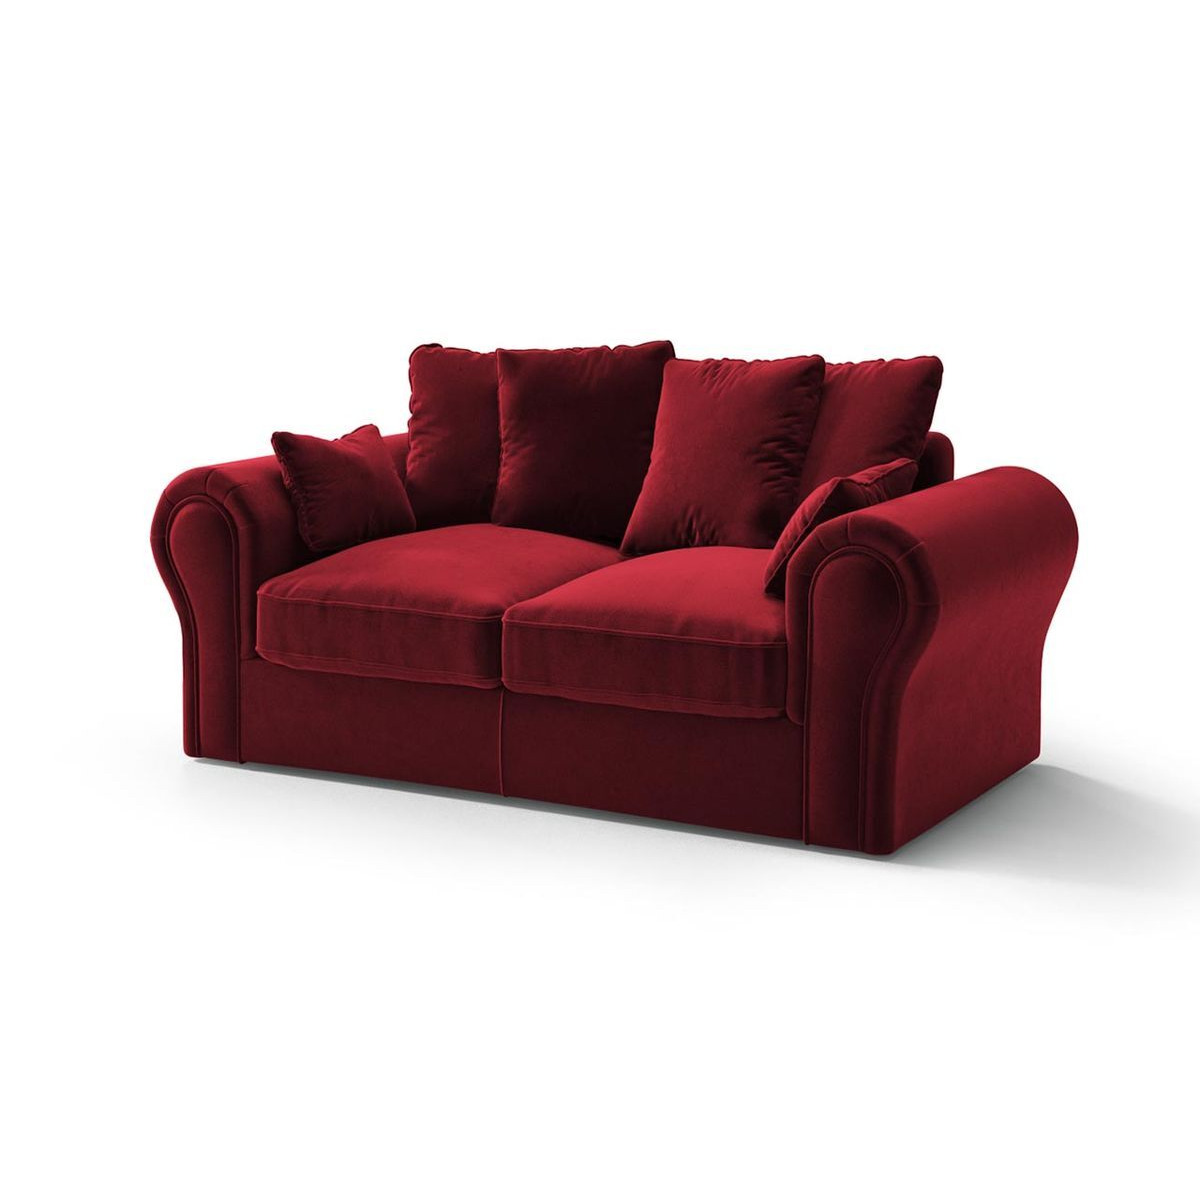 Baron 2 Seater Sofa, dark red - image 1